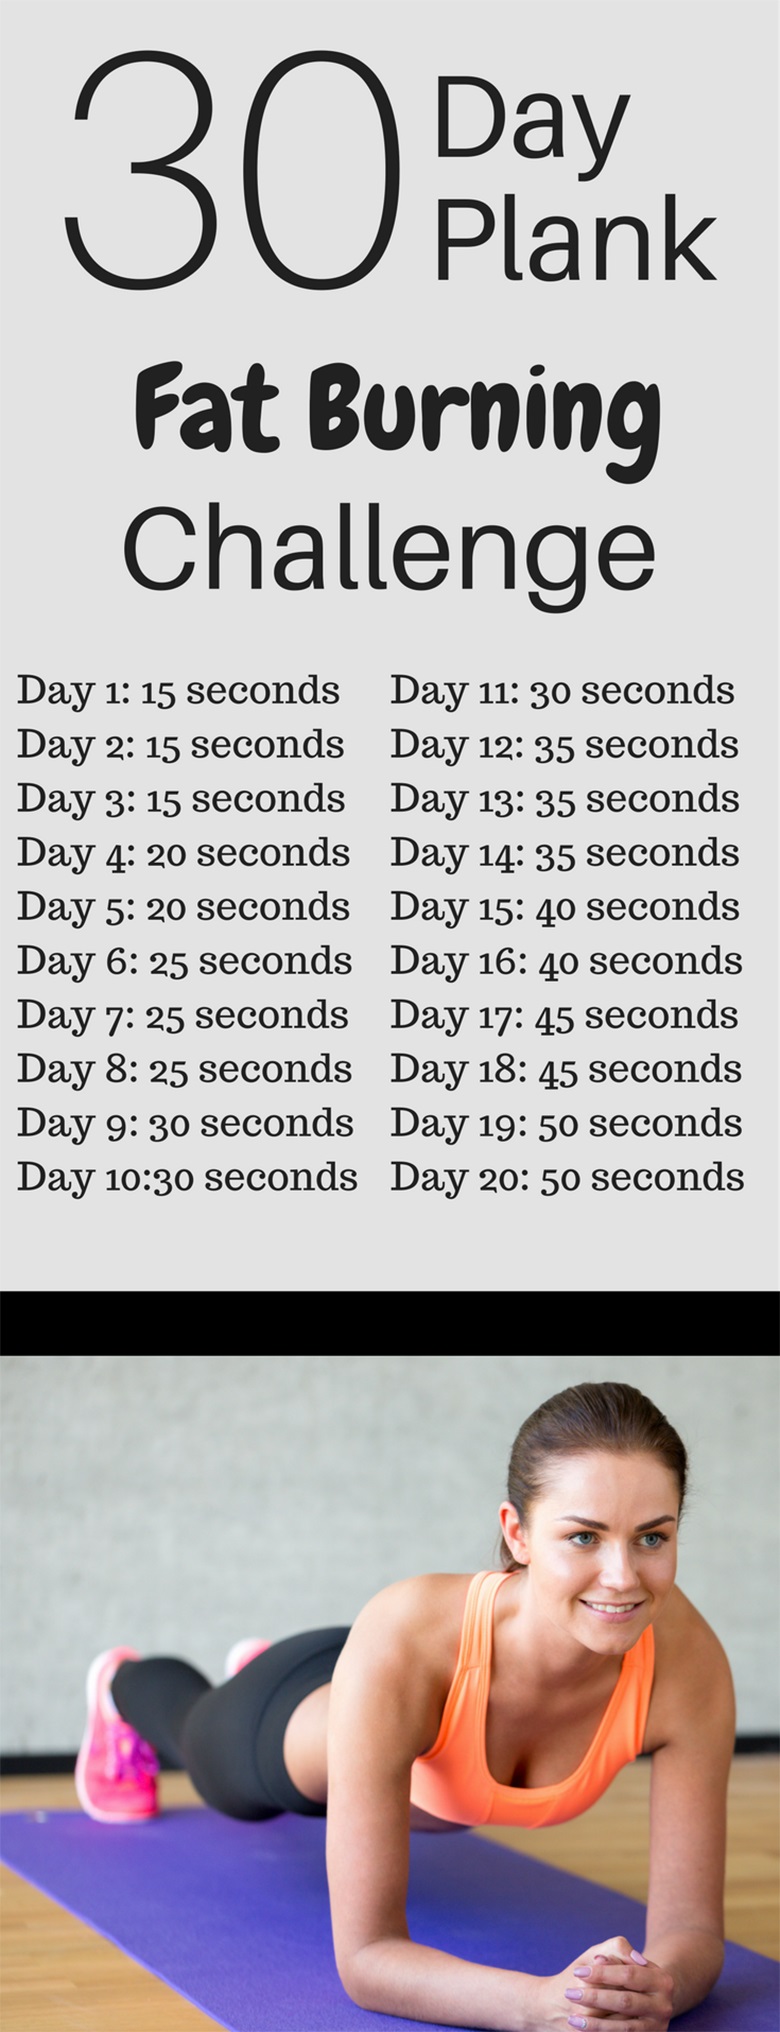 printable 30 day plank challenge 13